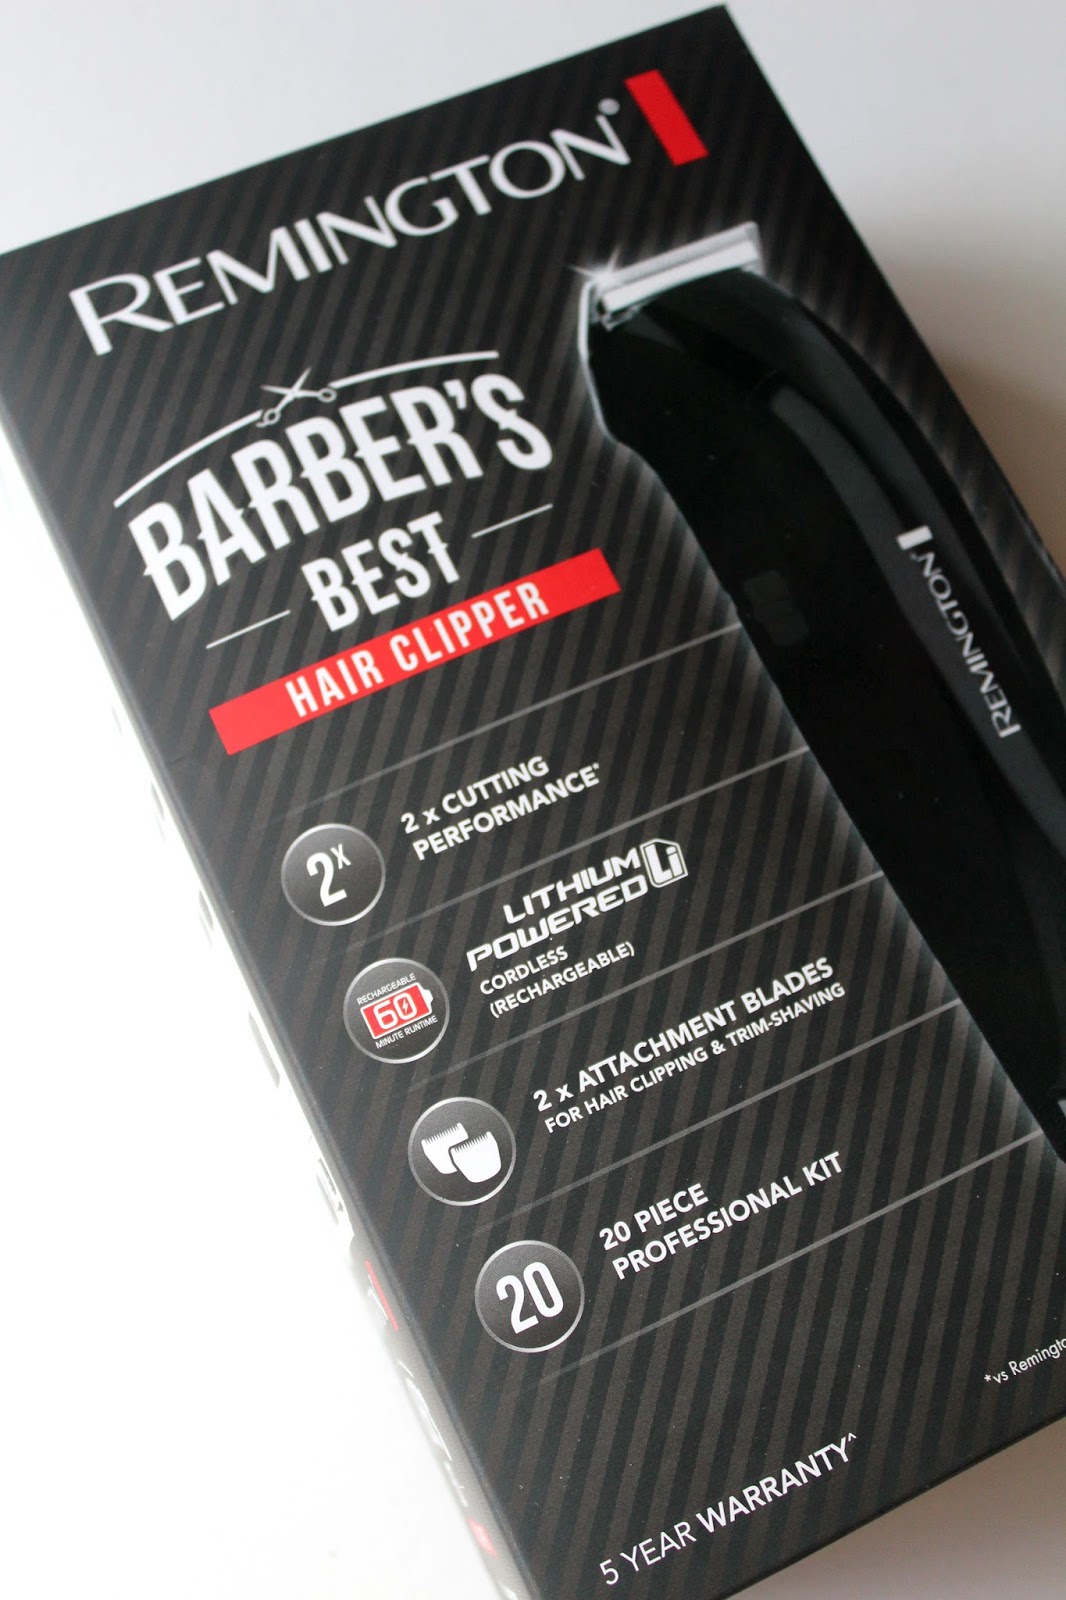 remington barber's best hair clipper